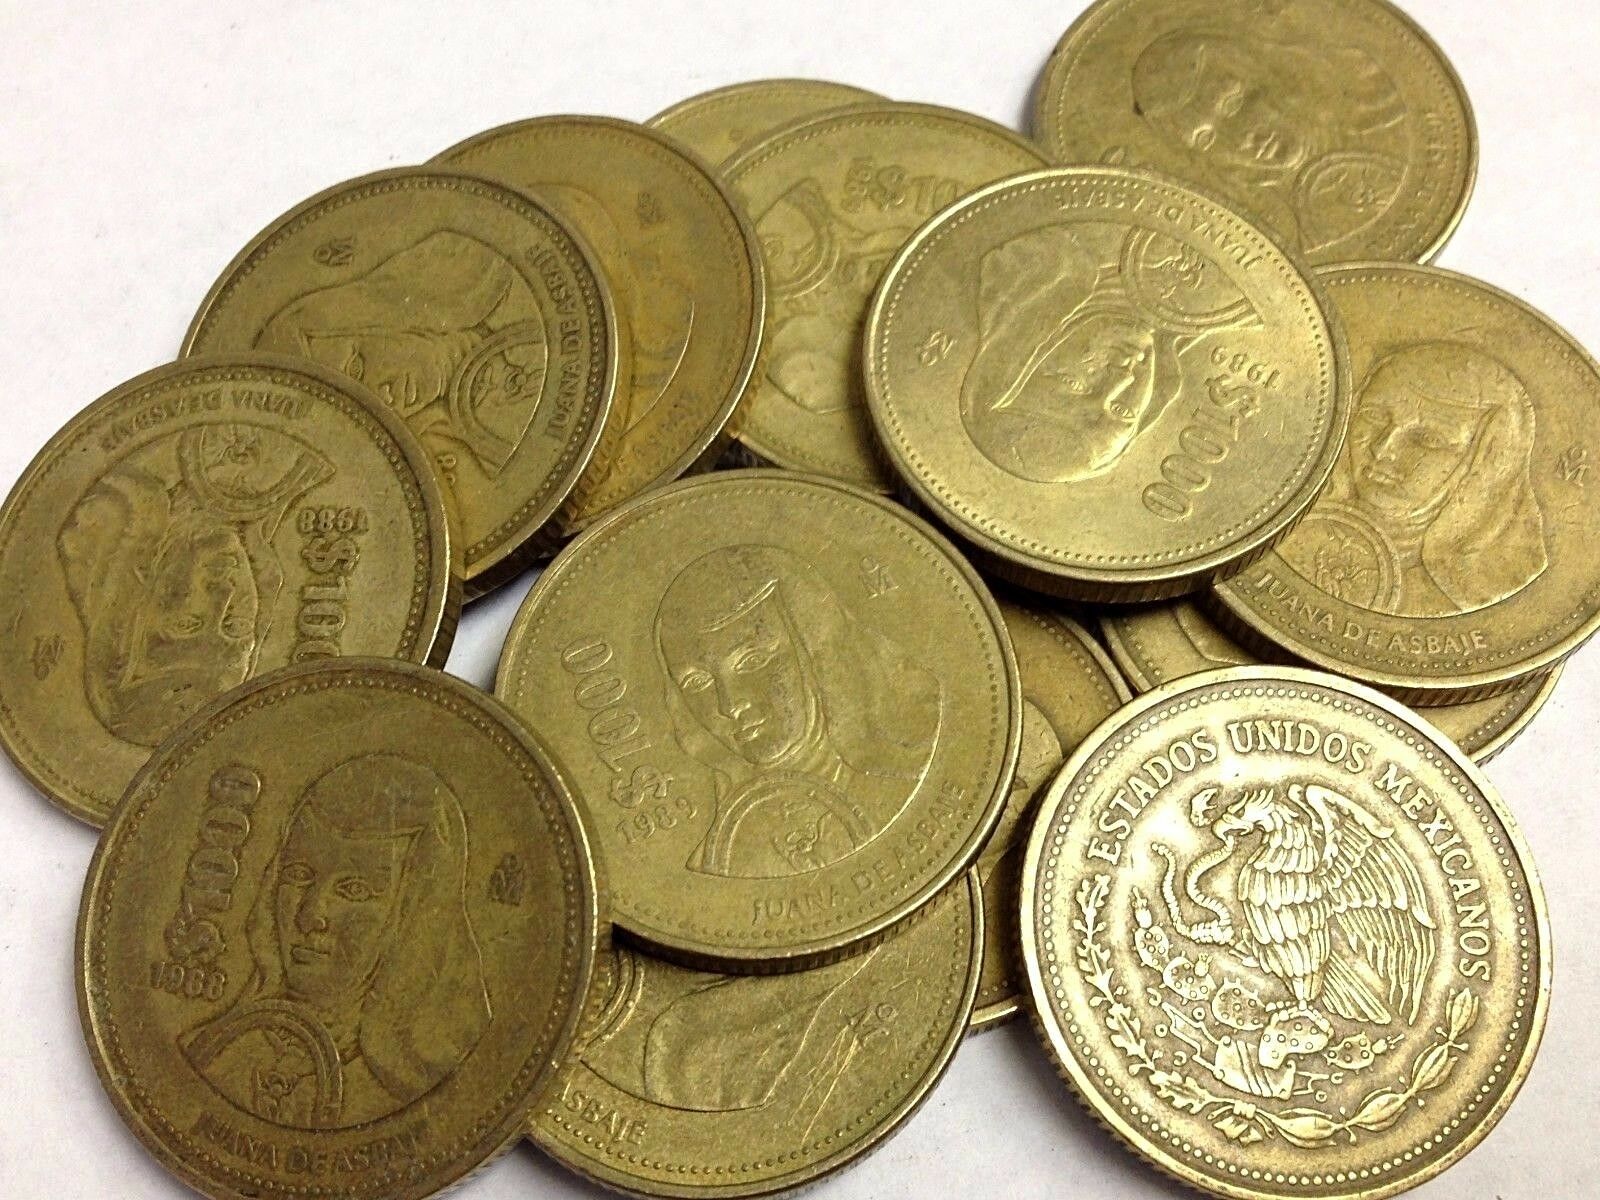 Mexico $1000 Peso Coin, Vintage Mexican Peso "juana De Asbaje" (1988-1992 Type)